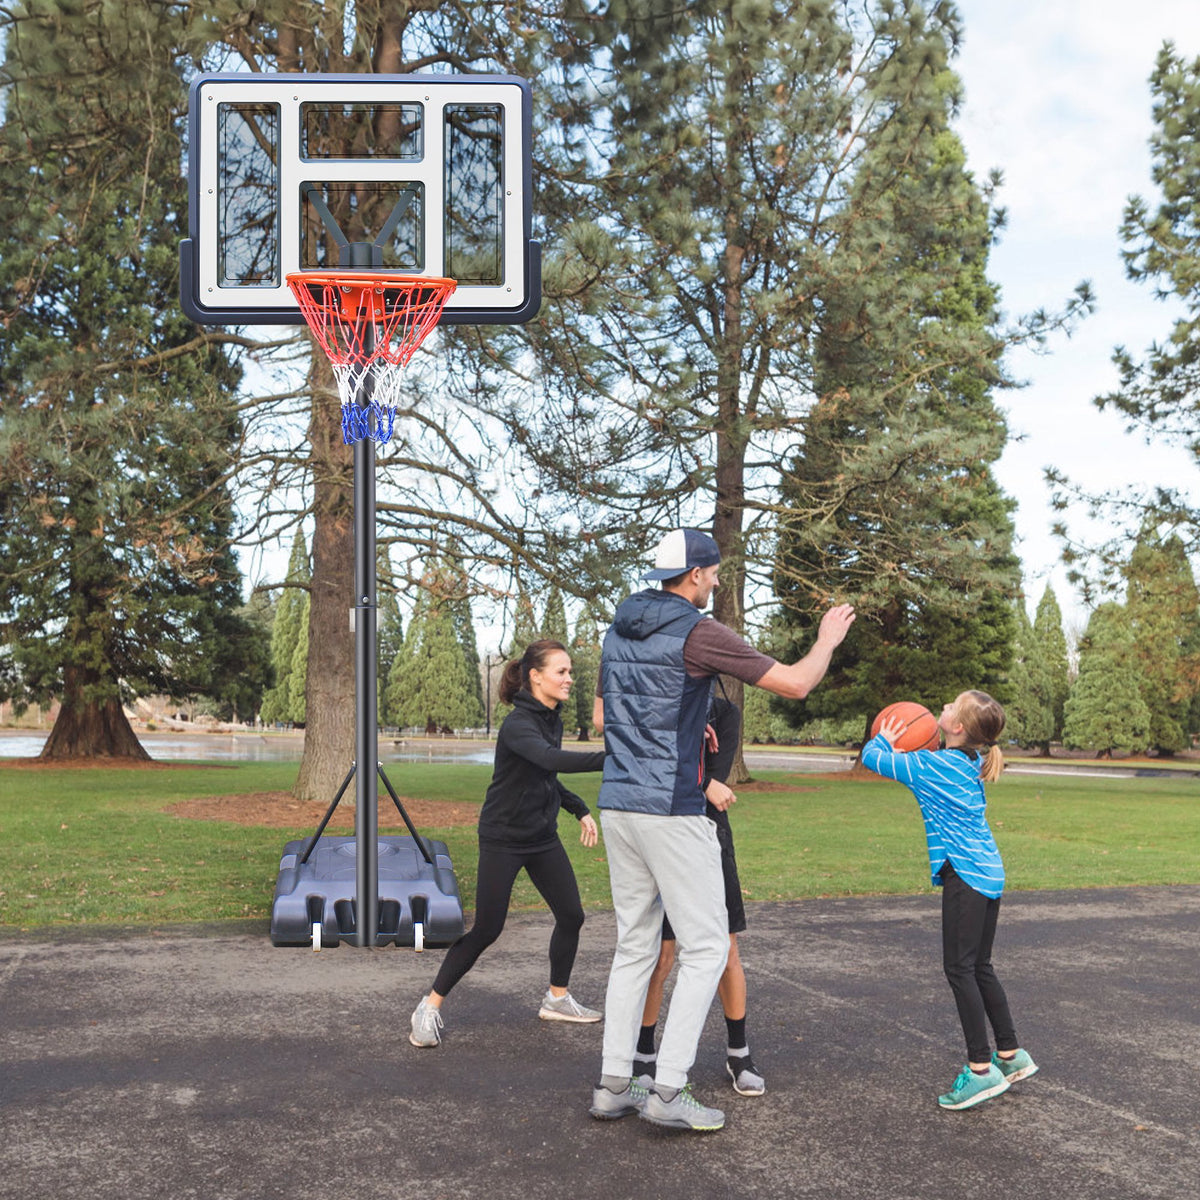 Outdoor Portable Basketball Hoop Height Adjustable Basketball Goal System with 44 Shatterproof Backboard & Wheels